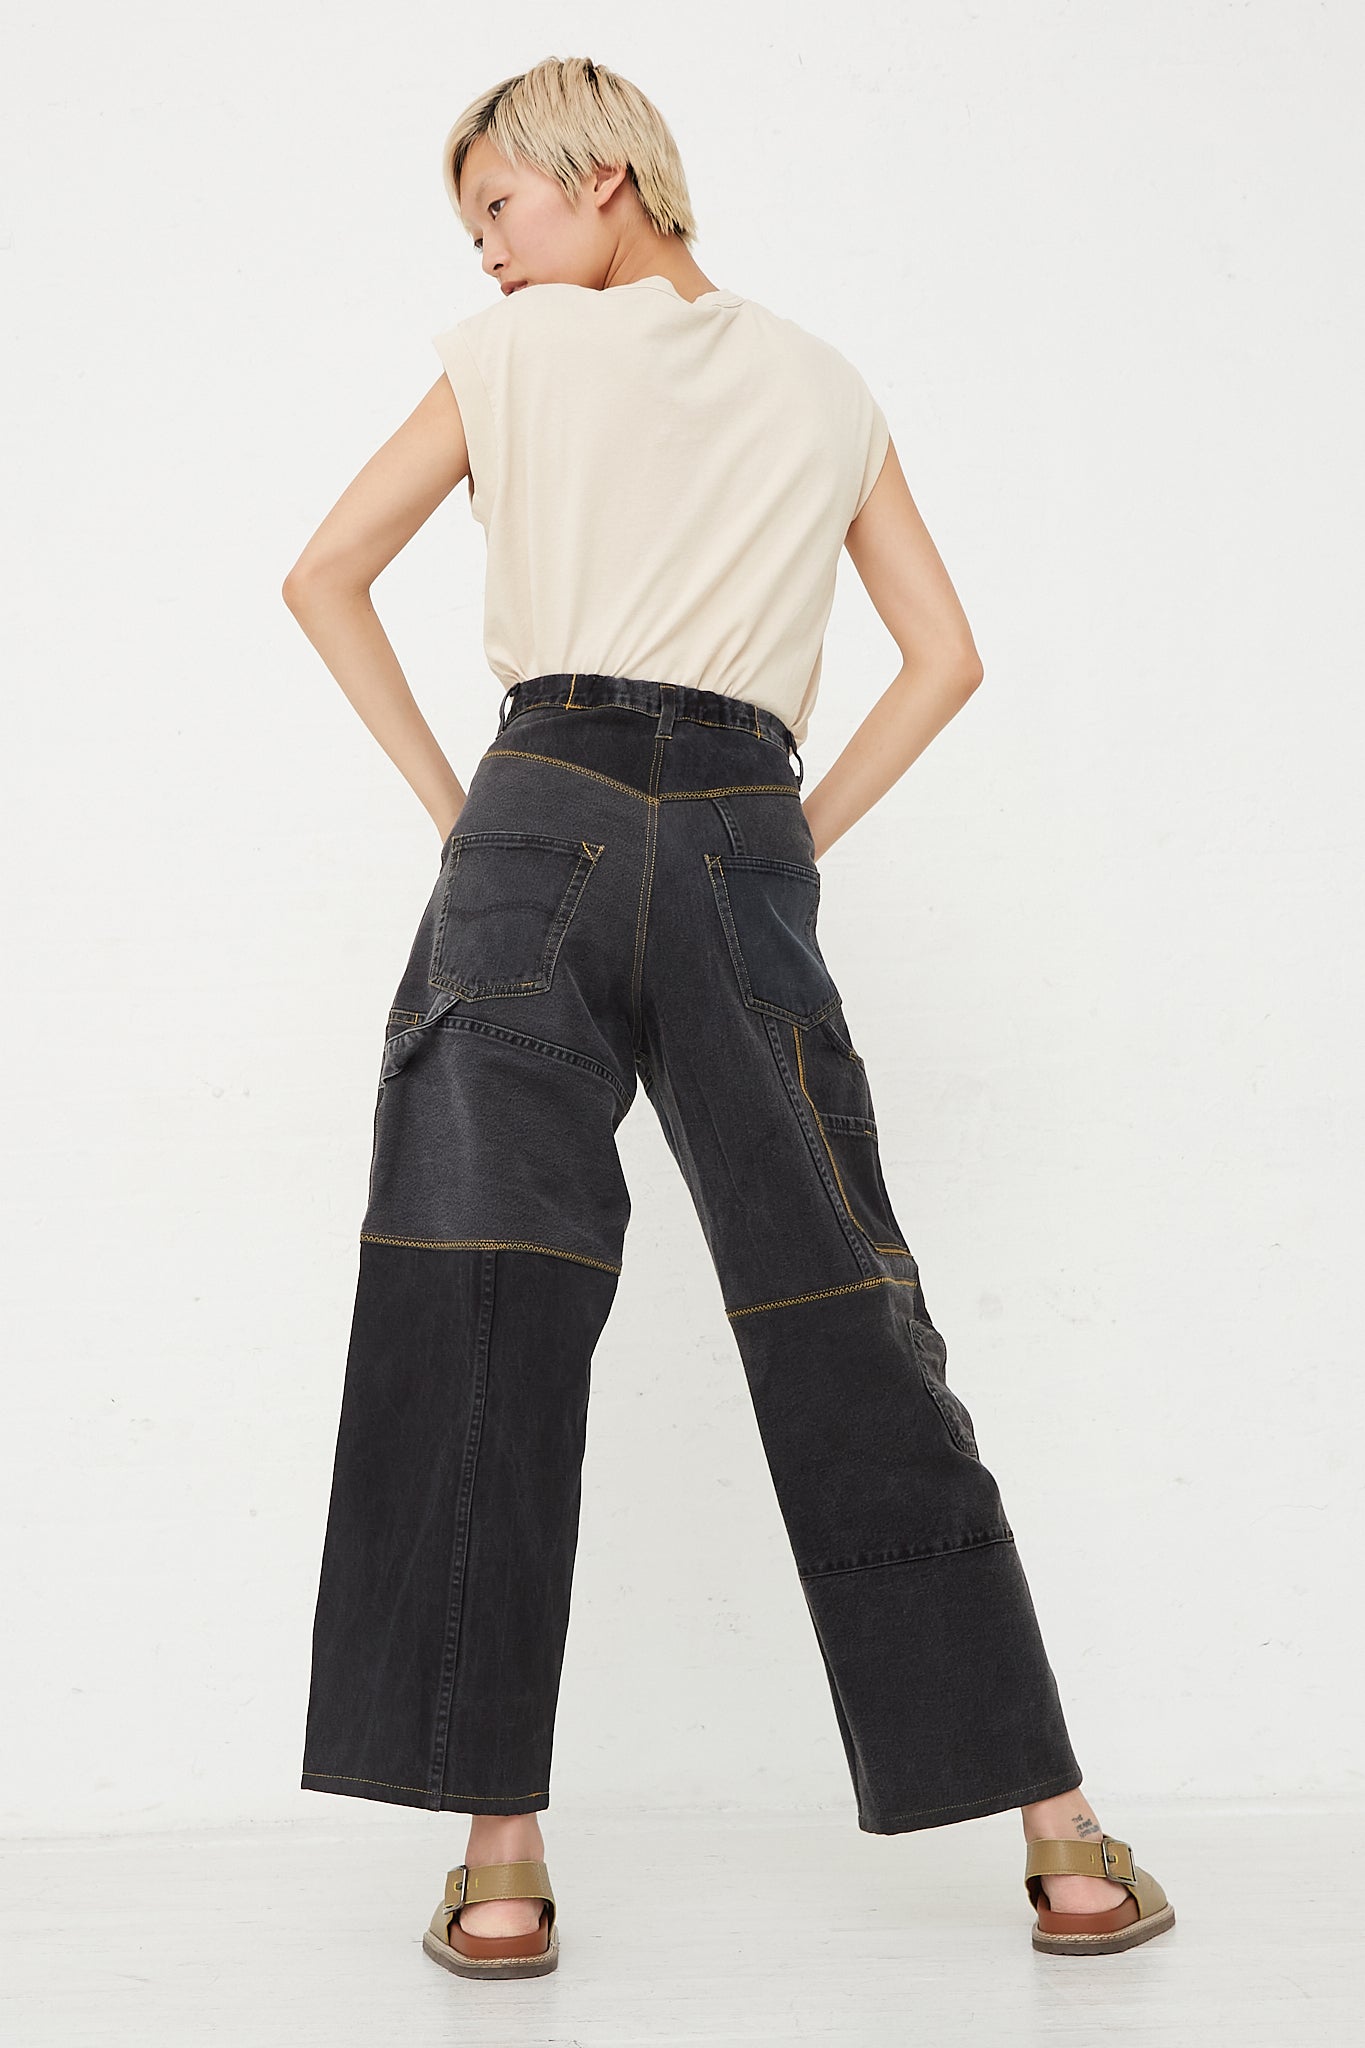 WildRootz - Reworked Jeans in Black Variation B - M full back view